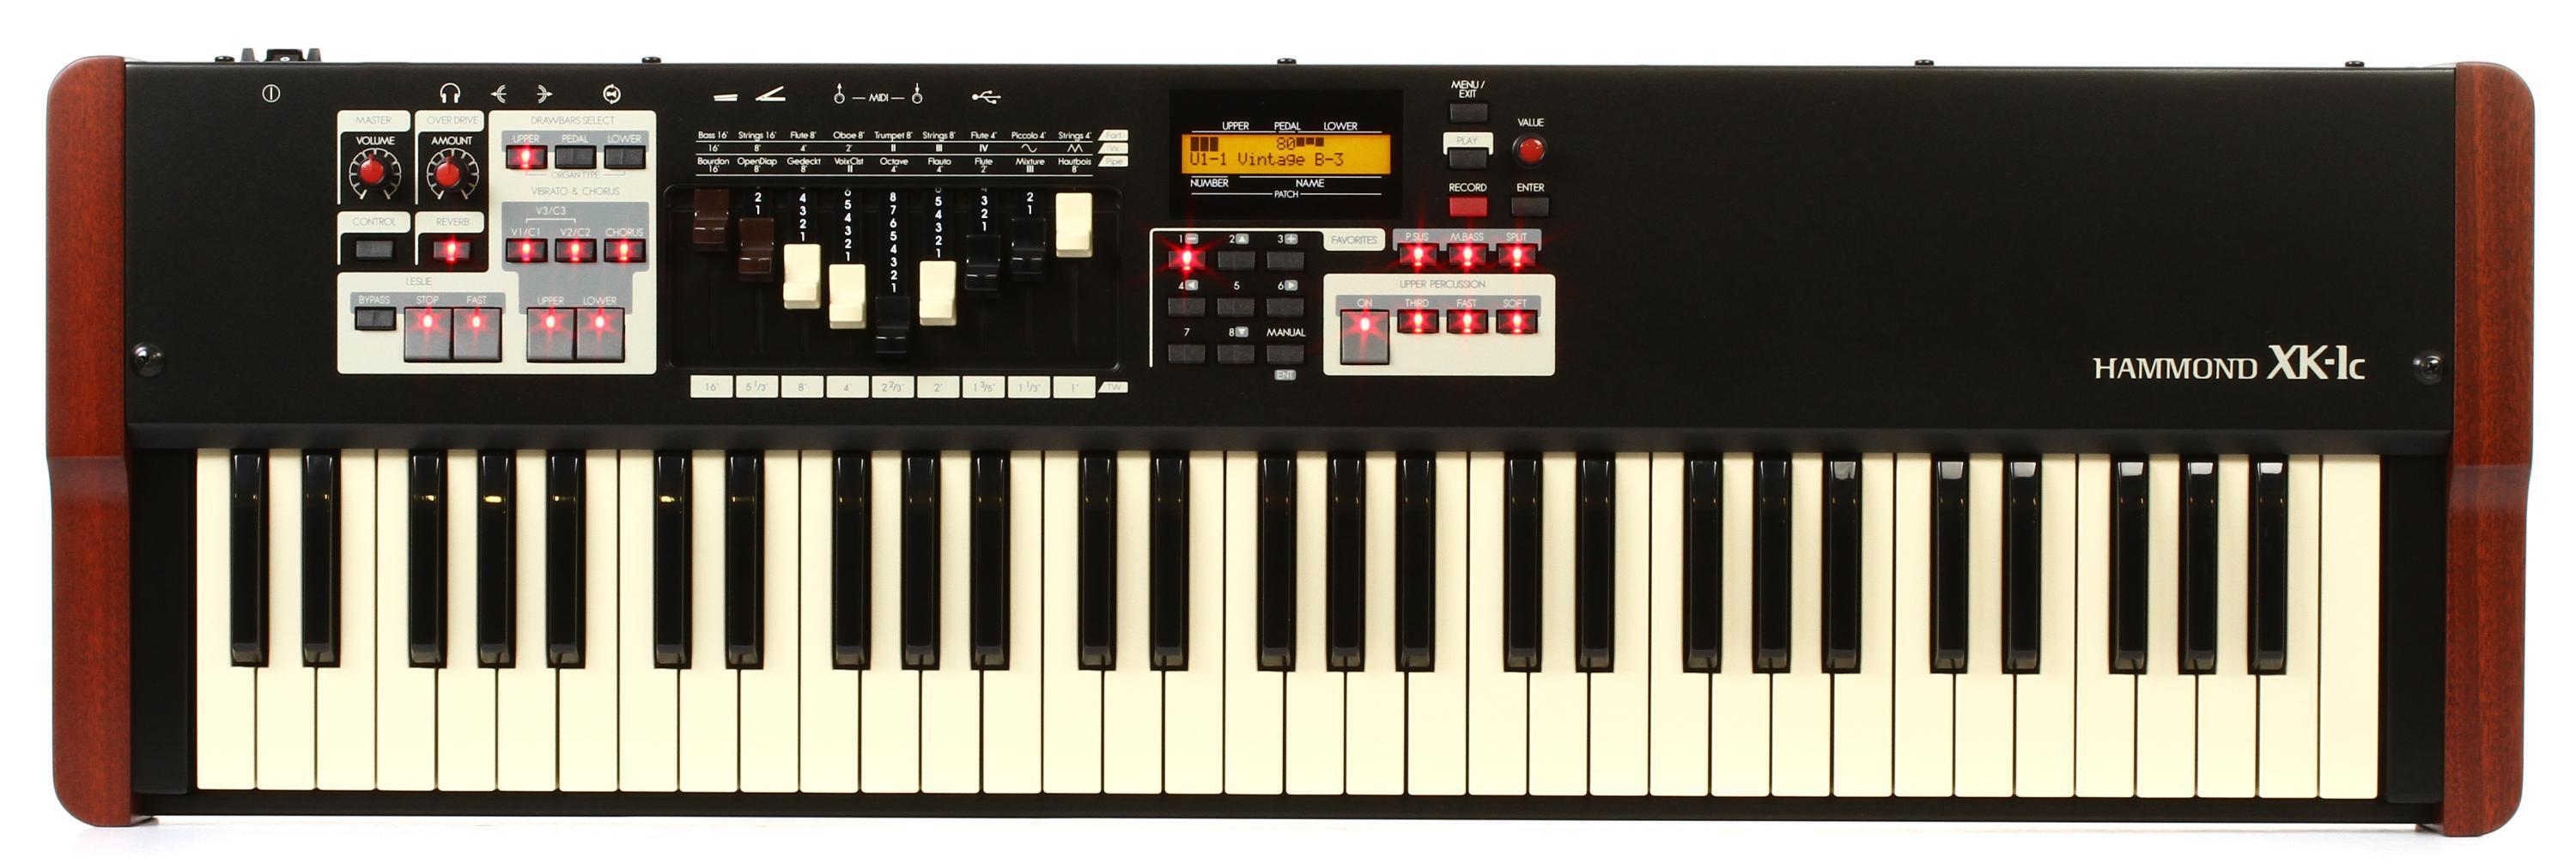 Hammond XK-1c 61-Key Portable Organ | Sweetwater